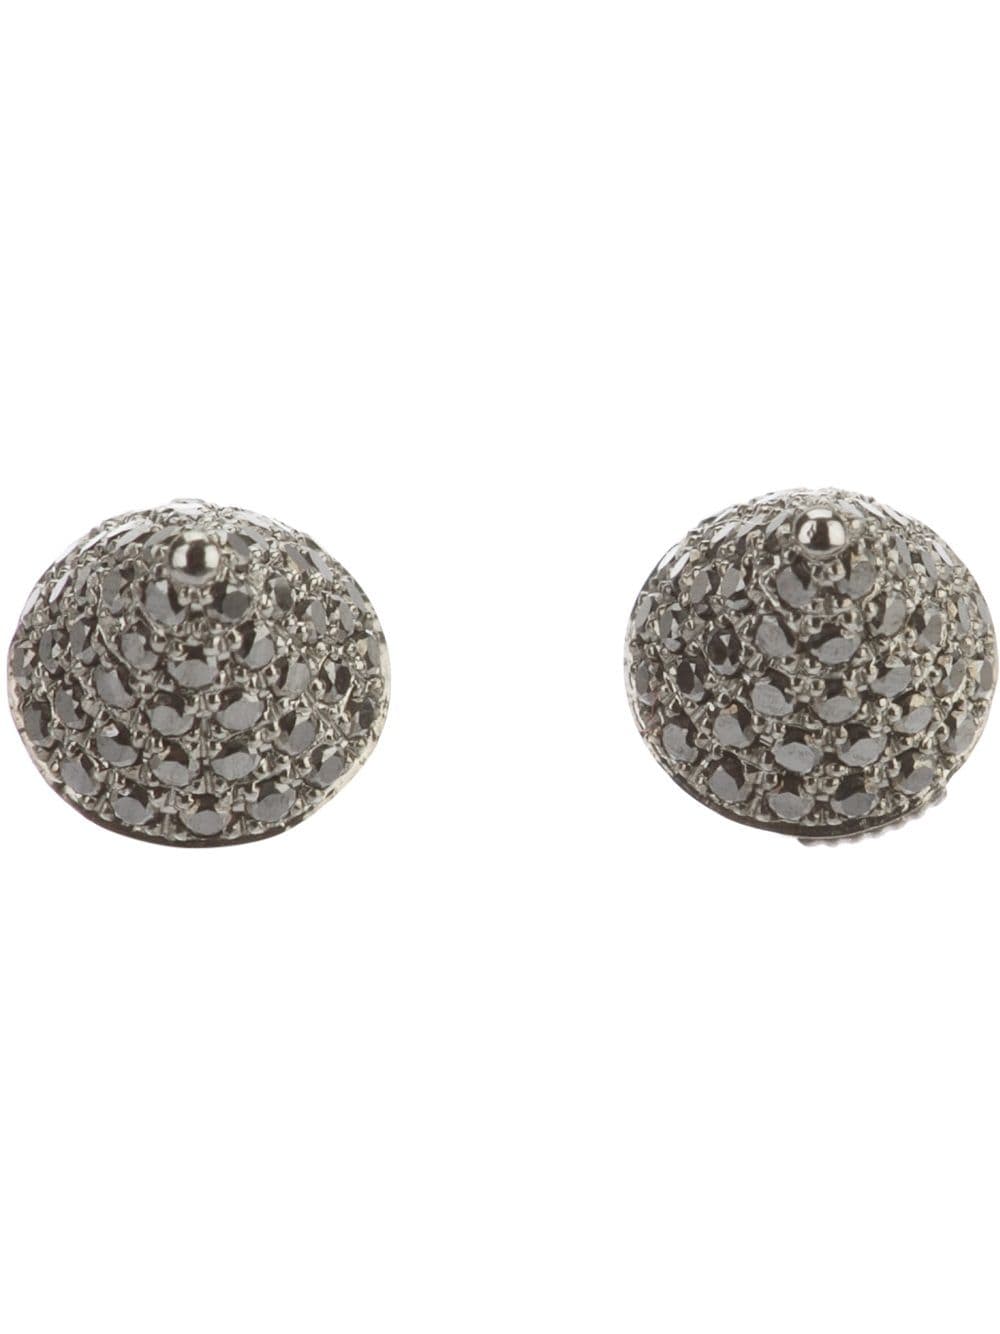 Image 1 of Elise Dray diamond 'Mini Muse' earrings